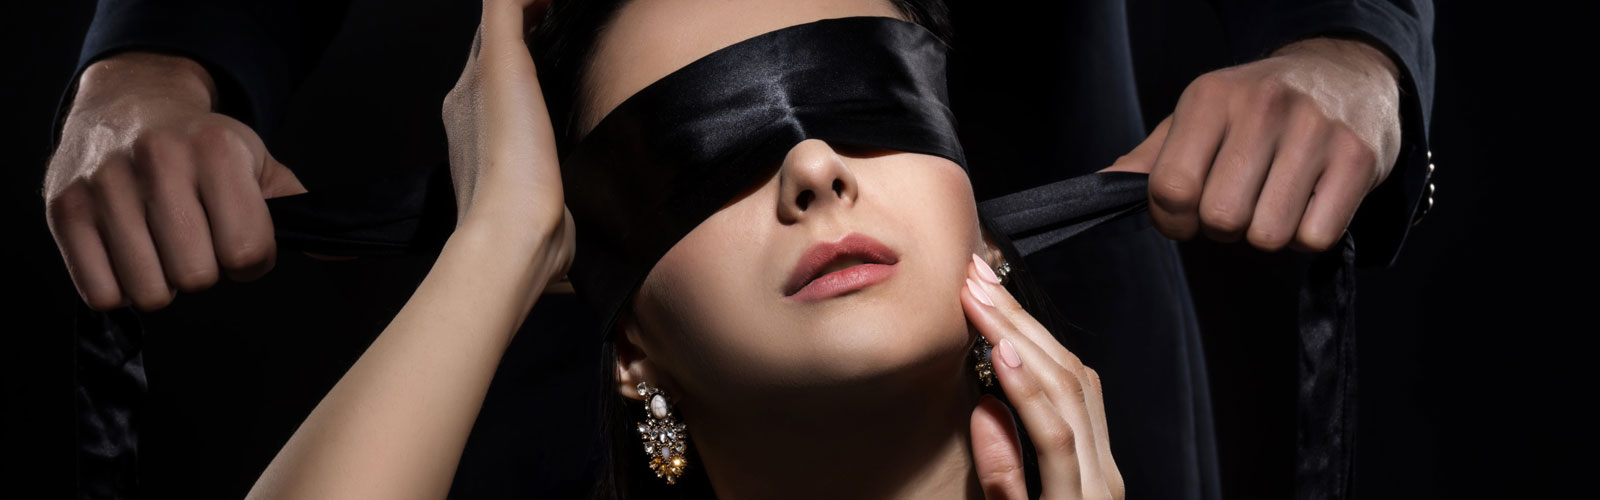 Woman wearing blindfold